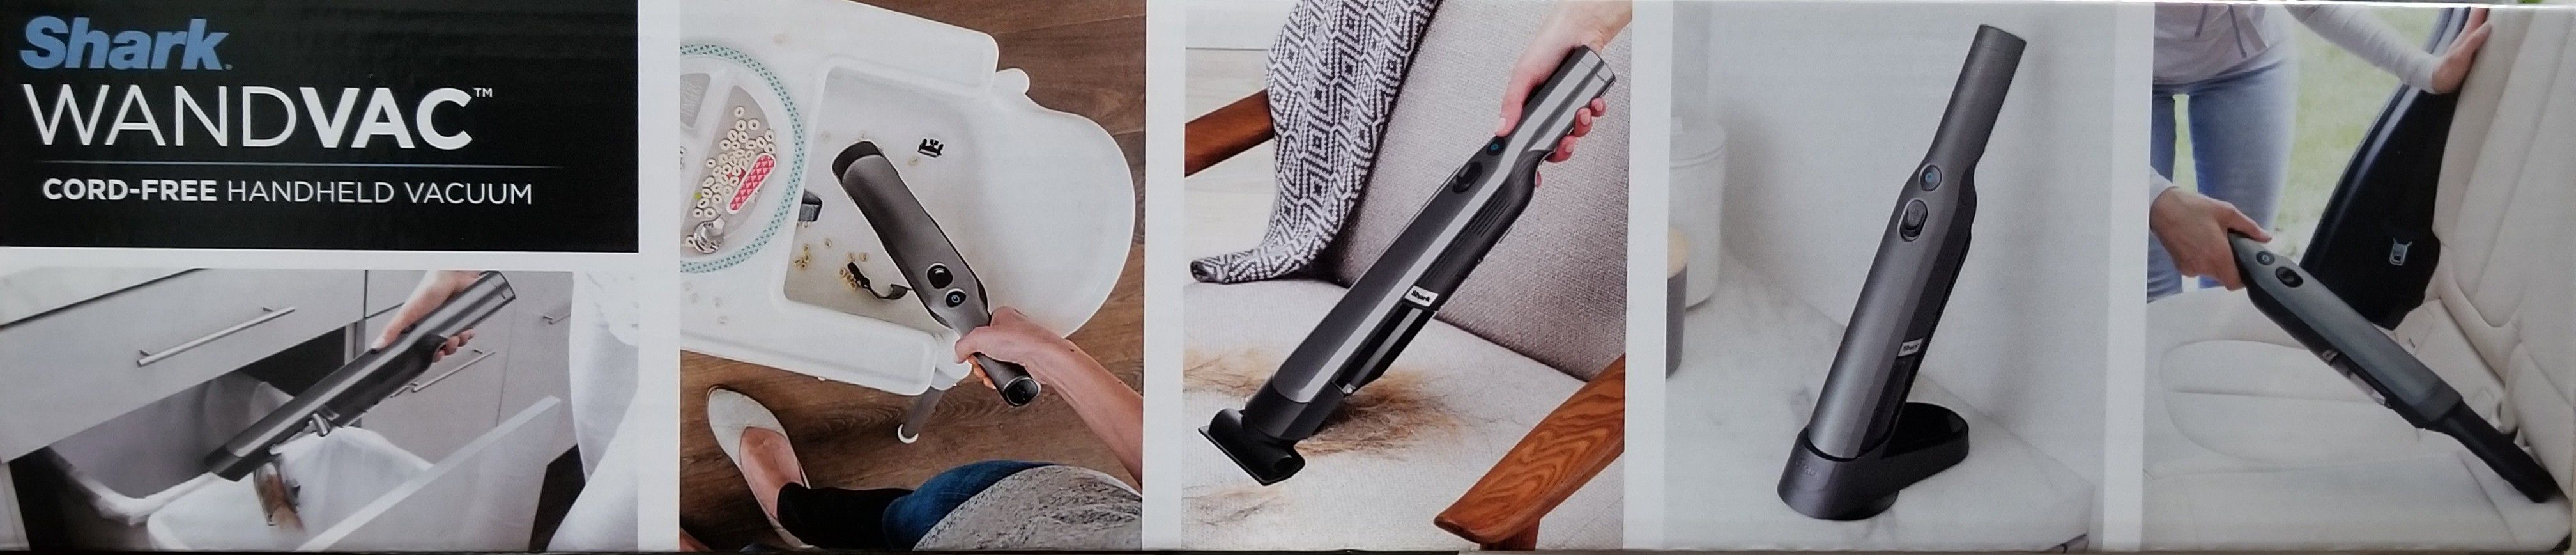 Shark® WANDVAC™ Cordless Handheld Vacuum - Slate

